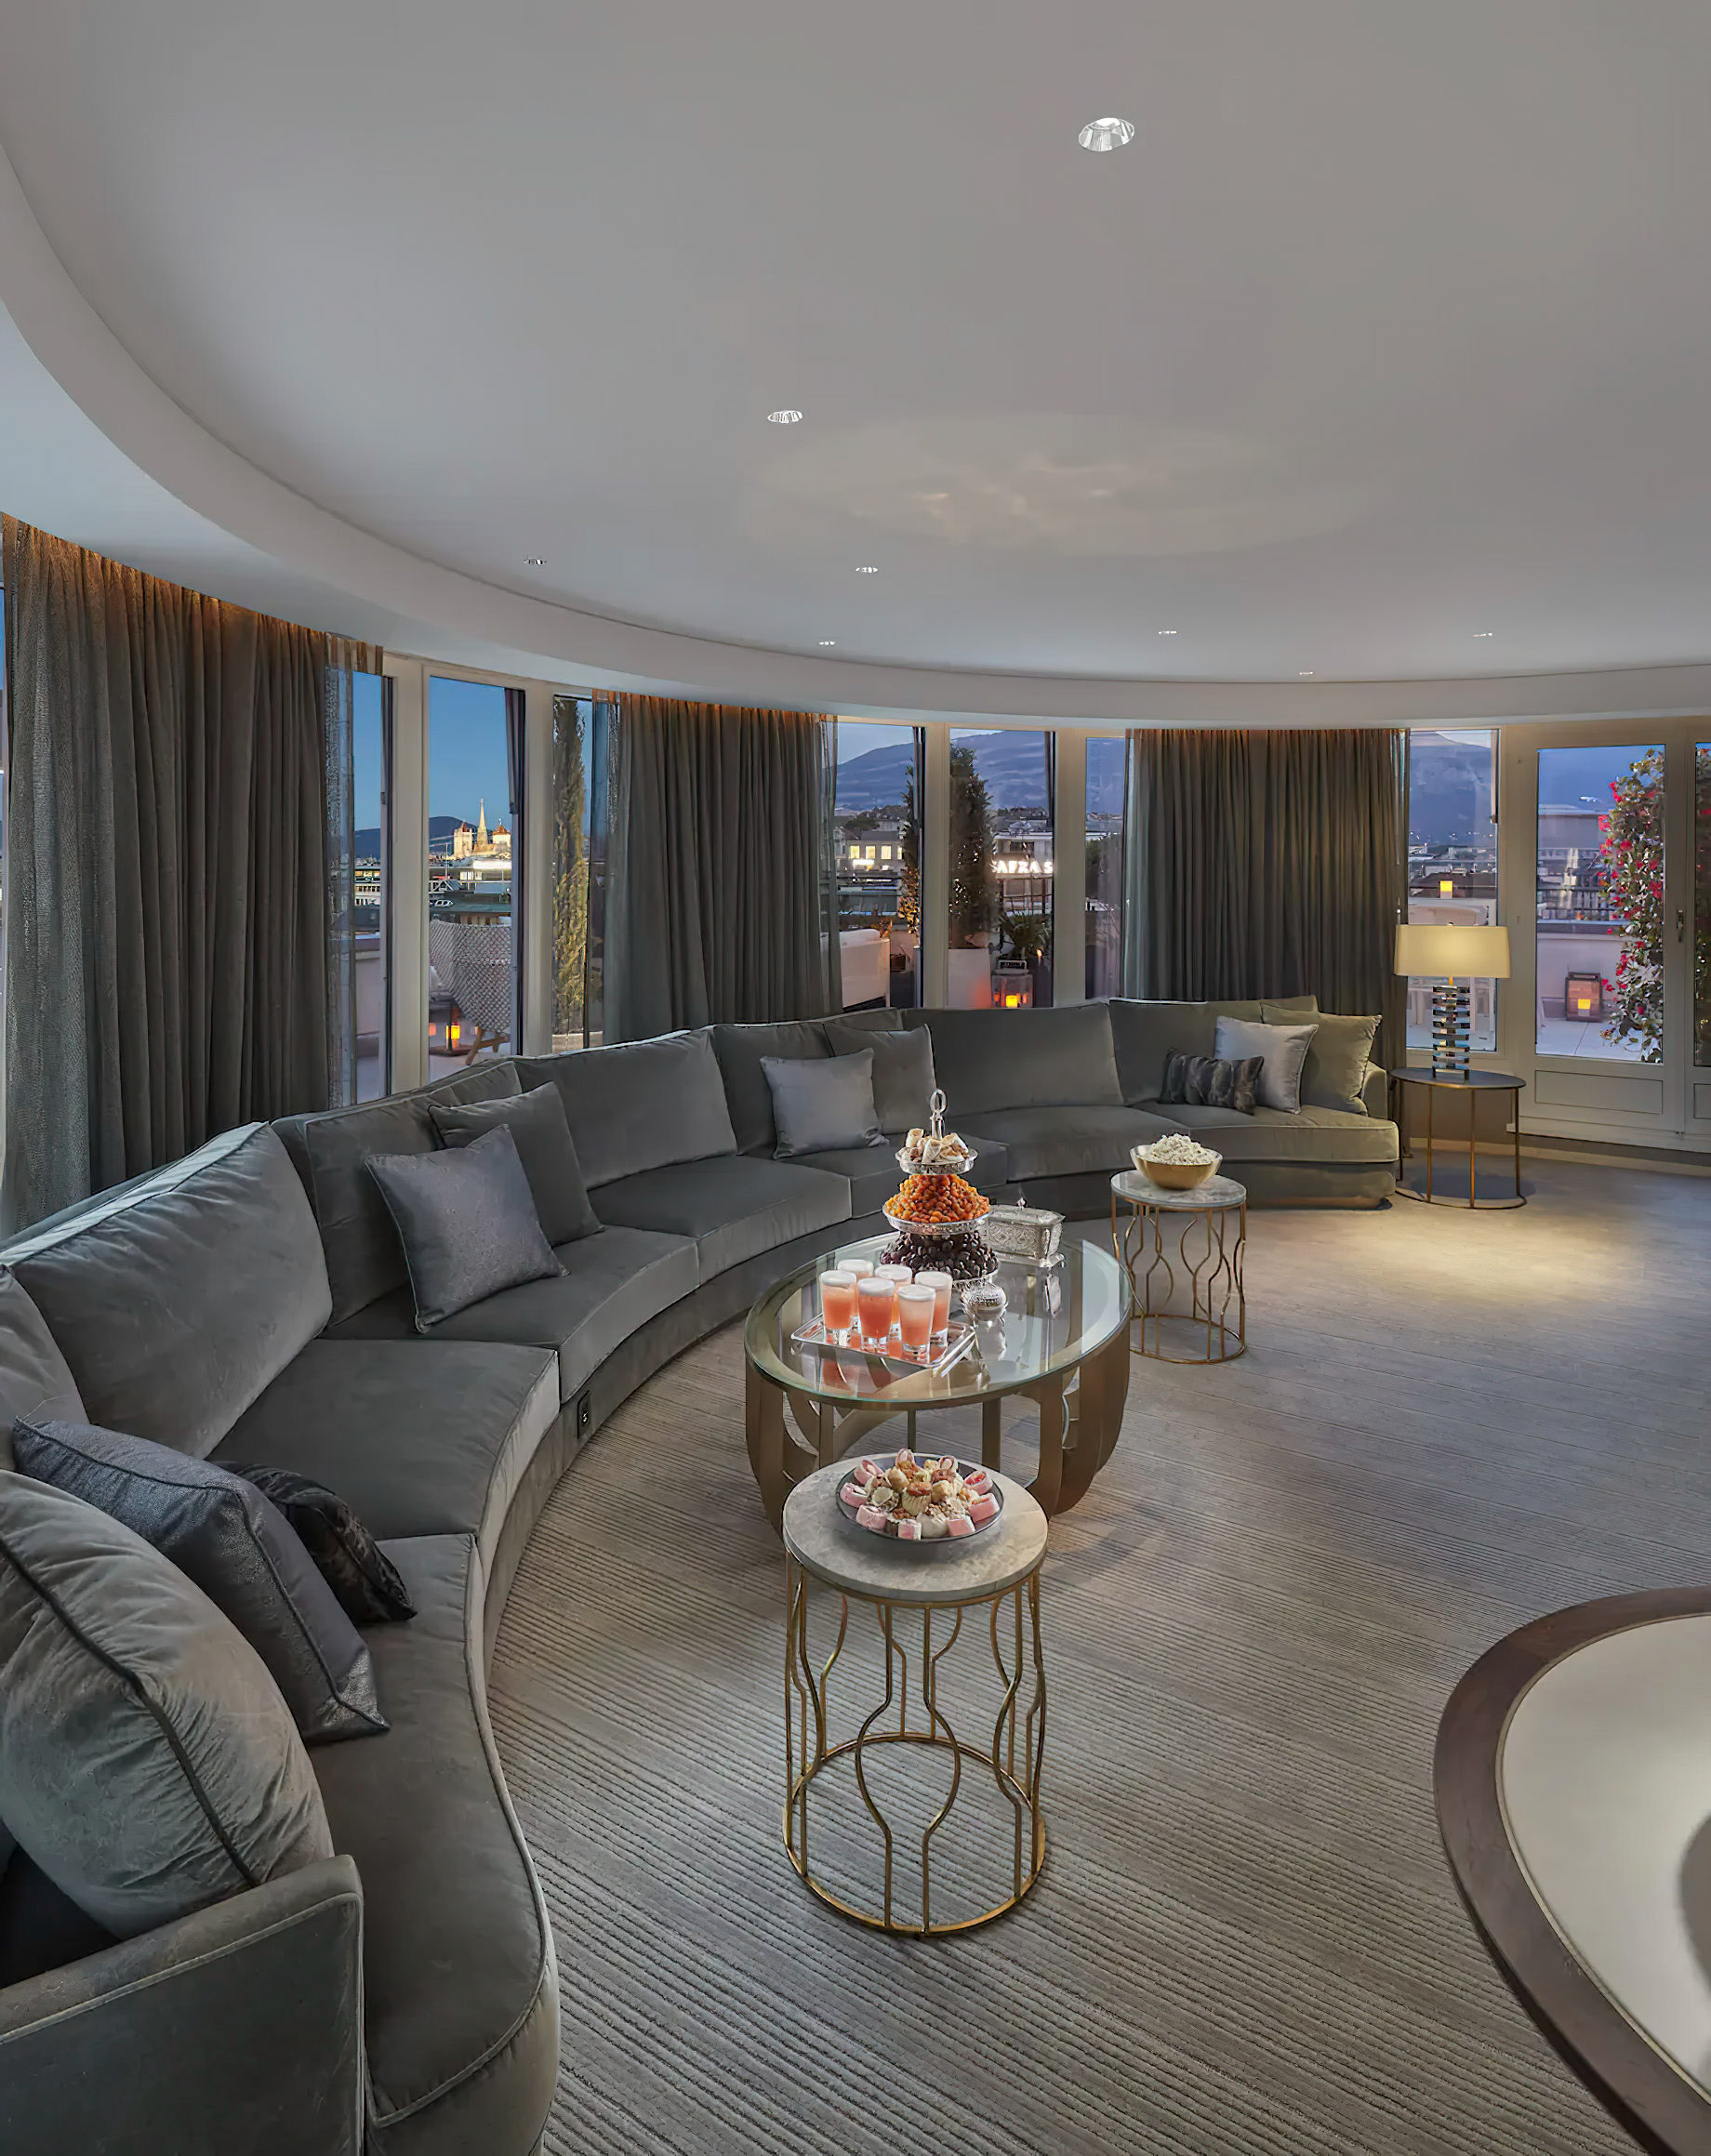 Mandarin Oriental, Geneva Hotel - Geneva, Switzerland - Royal Penthouse Entertainment Room